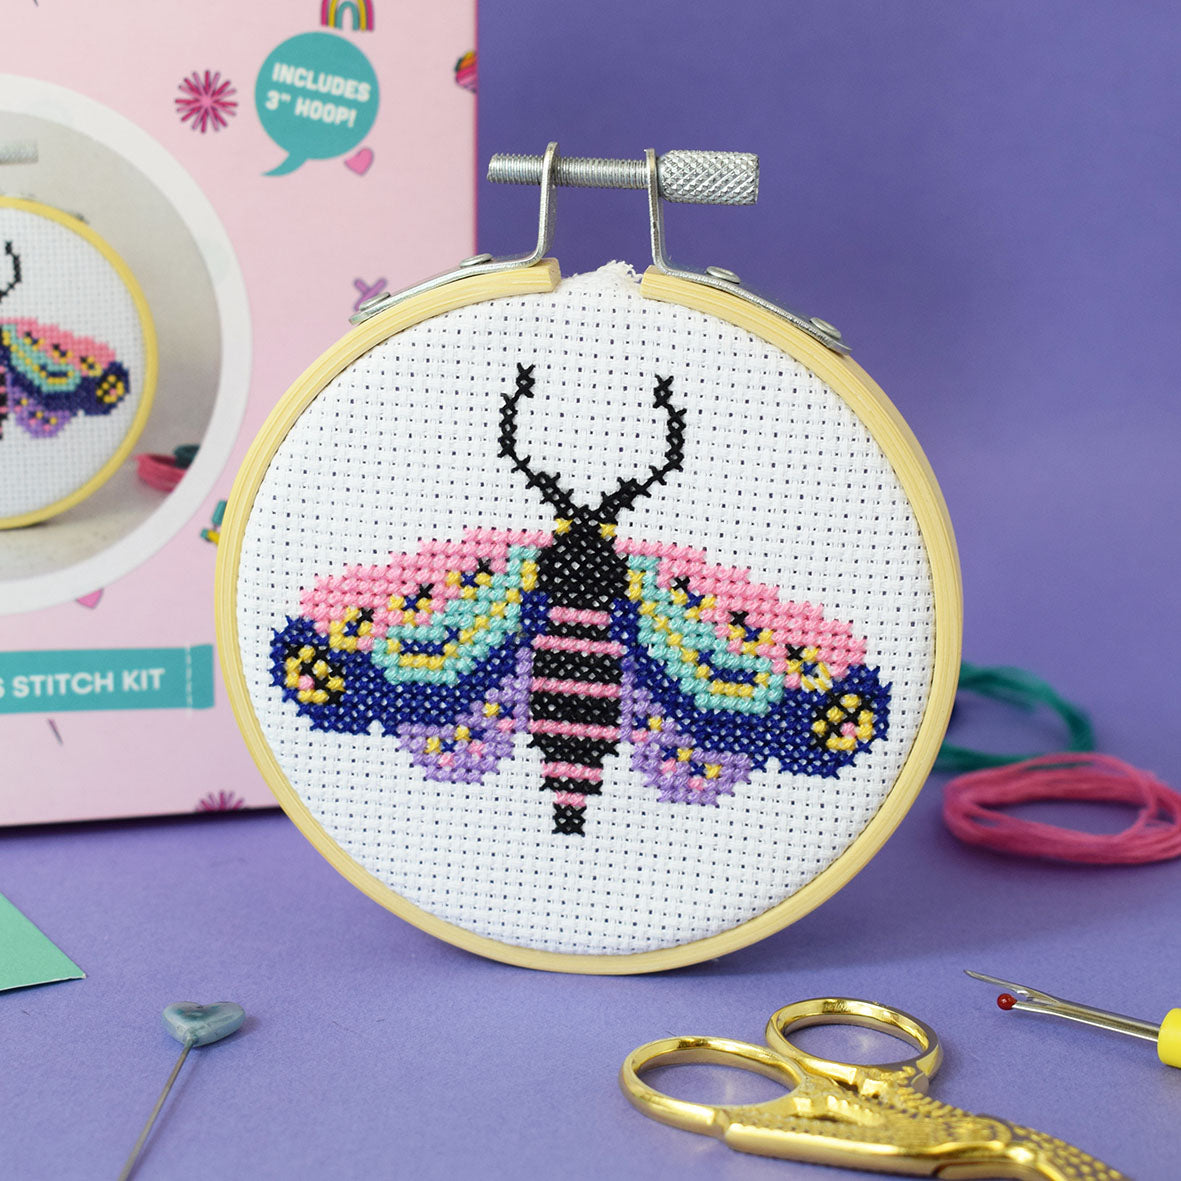 Moths Cross Stitch Kit